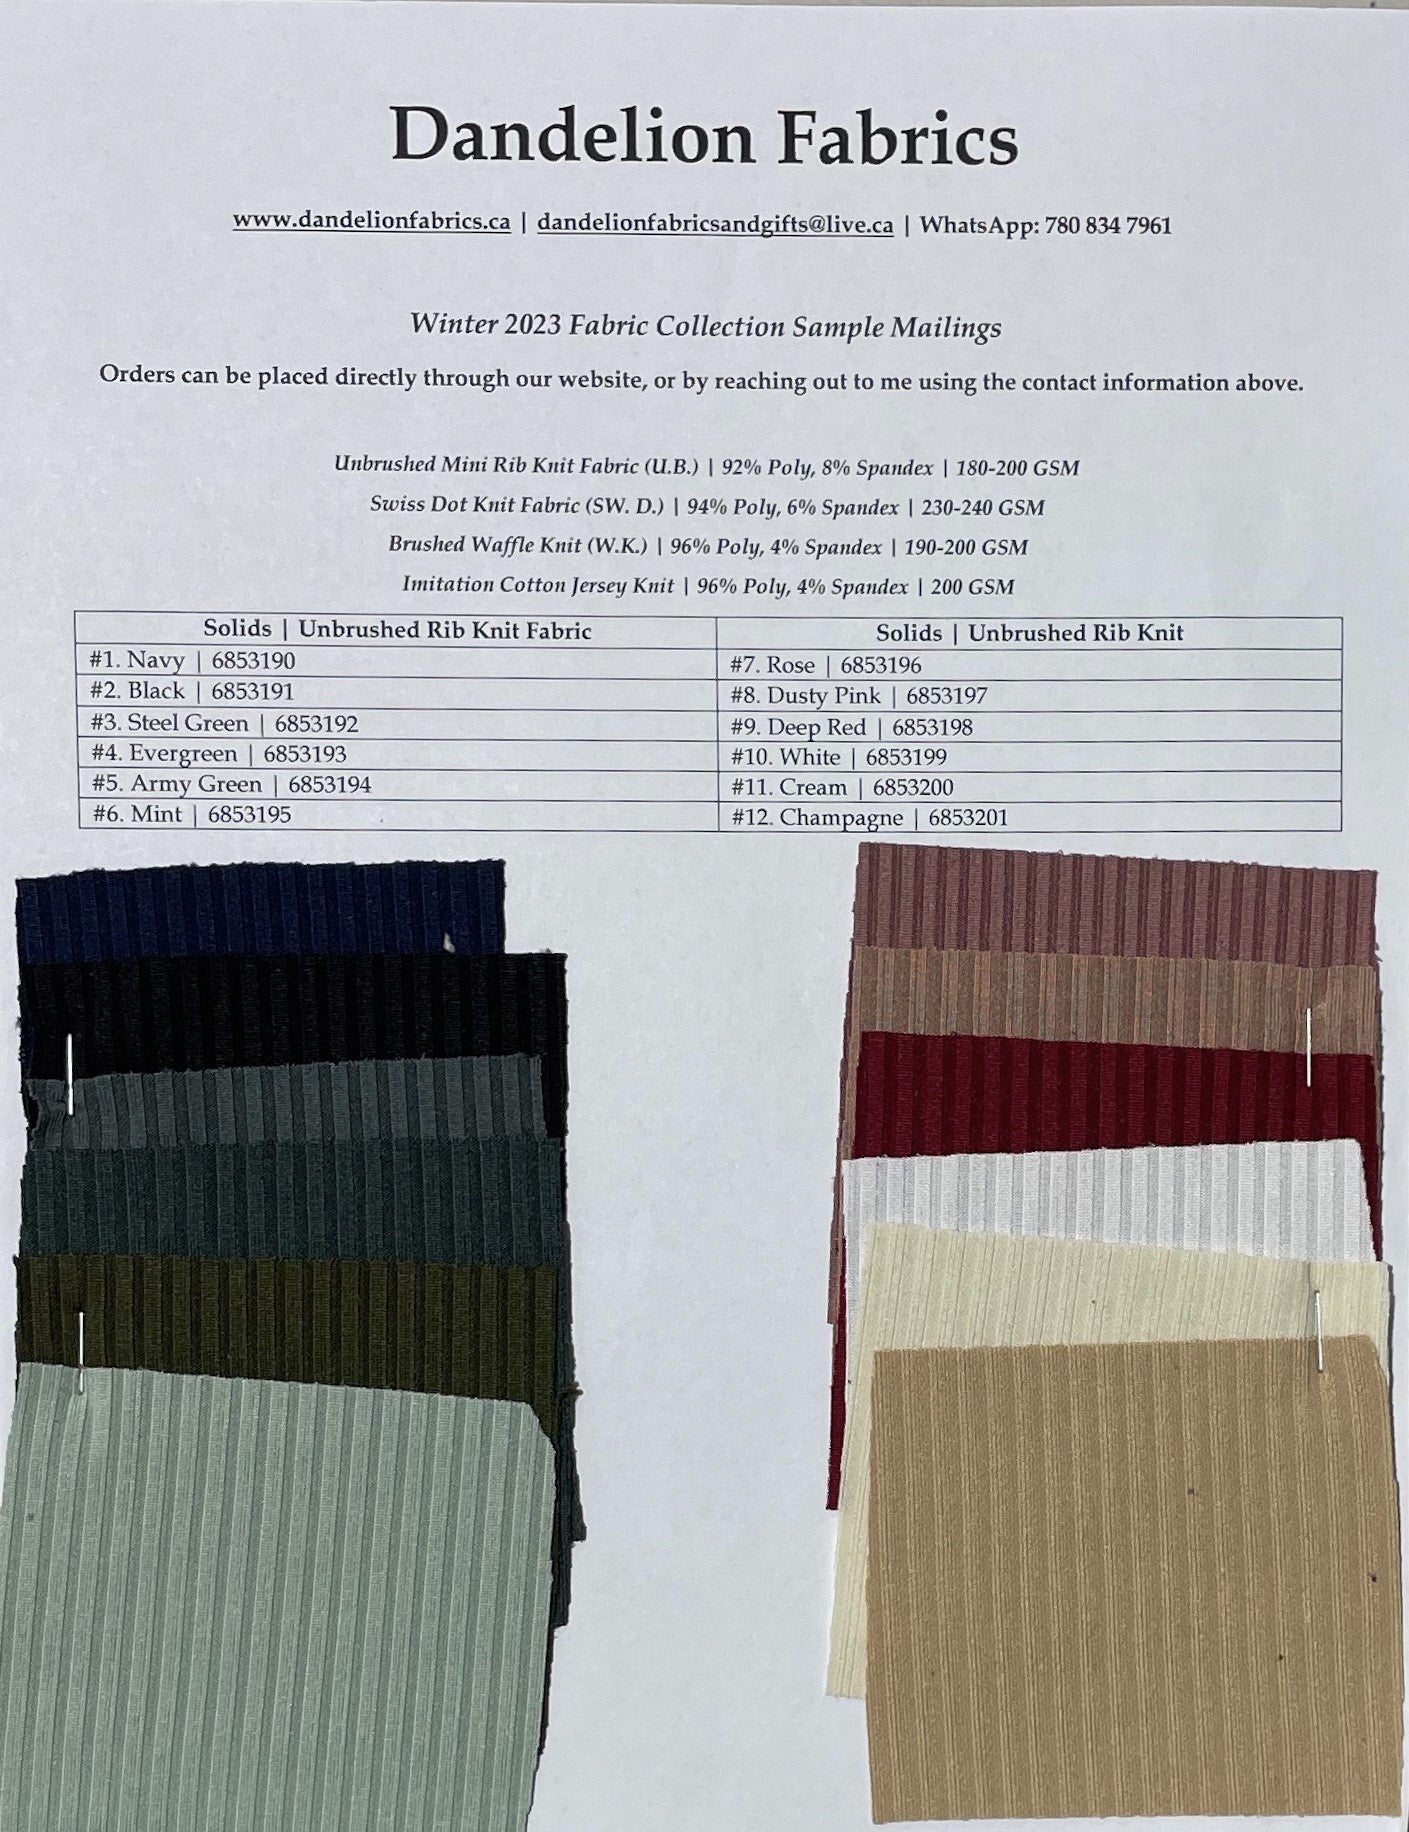 Black Solid | Unbrushed Rib Knit Fabric